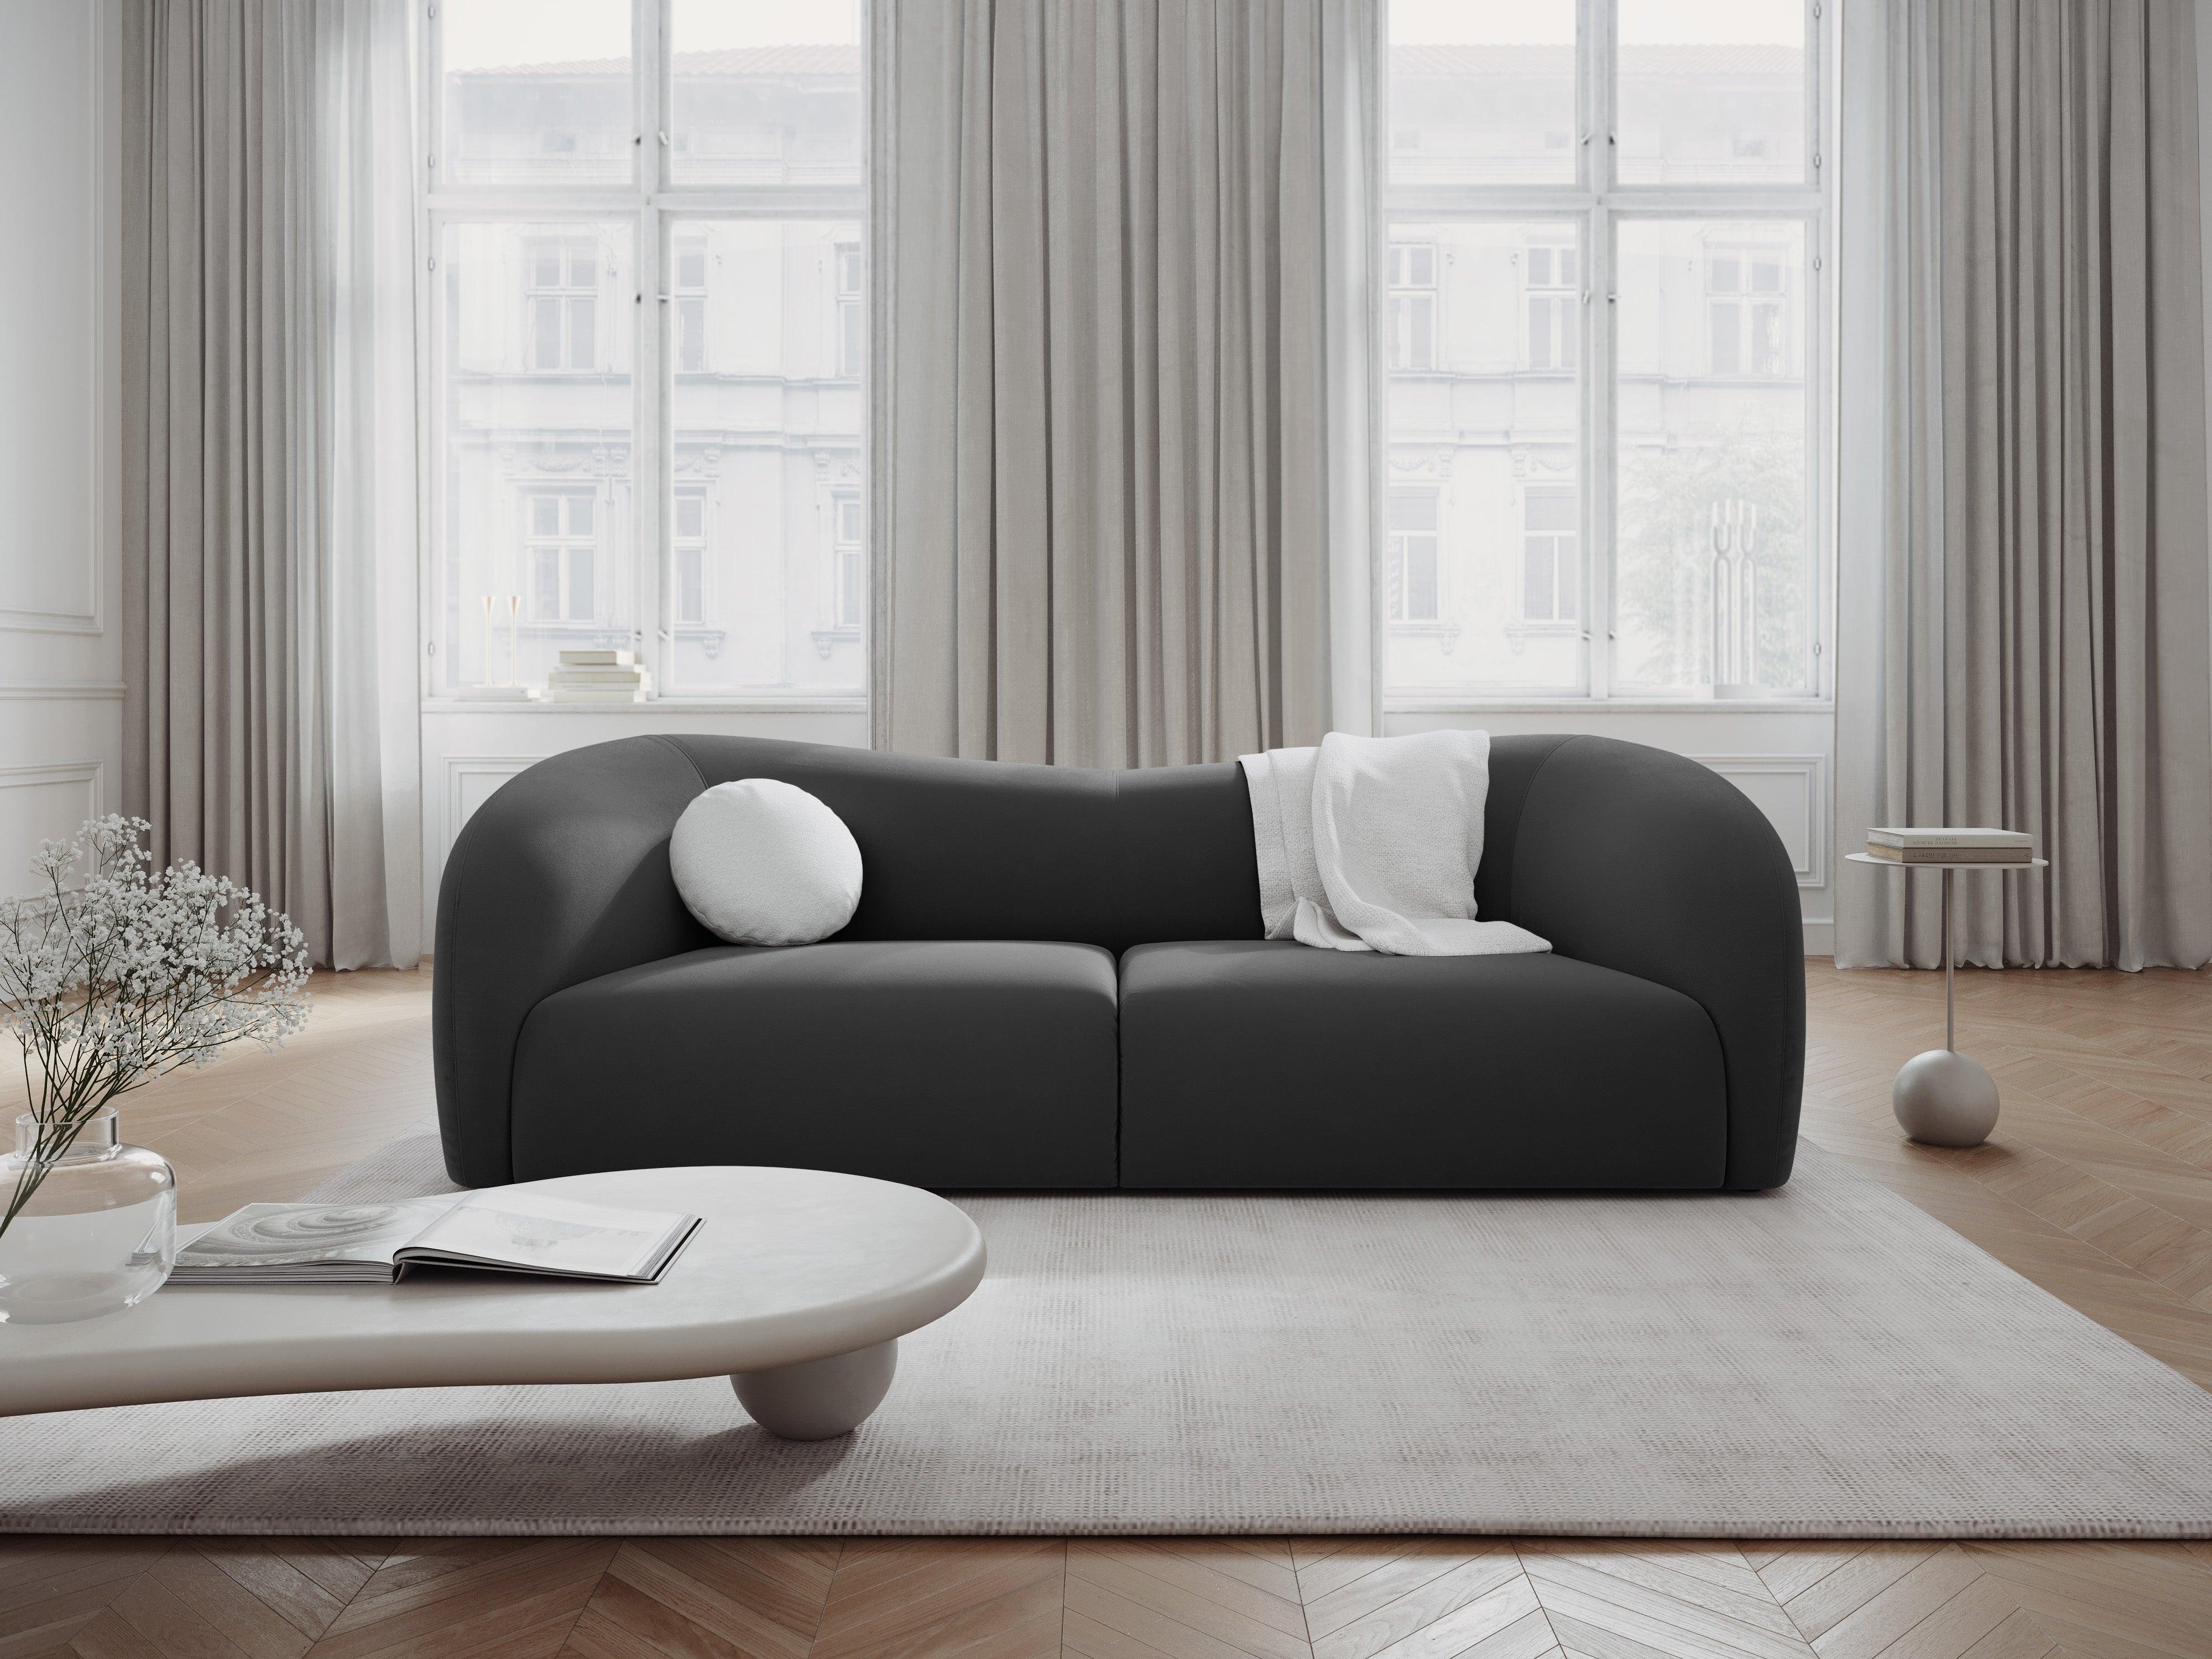 Velvet Sofa, "Santi", 3 Seats, Dark Grey, 237x90x75
Made in Europe Interieurs 86    Eye on Design